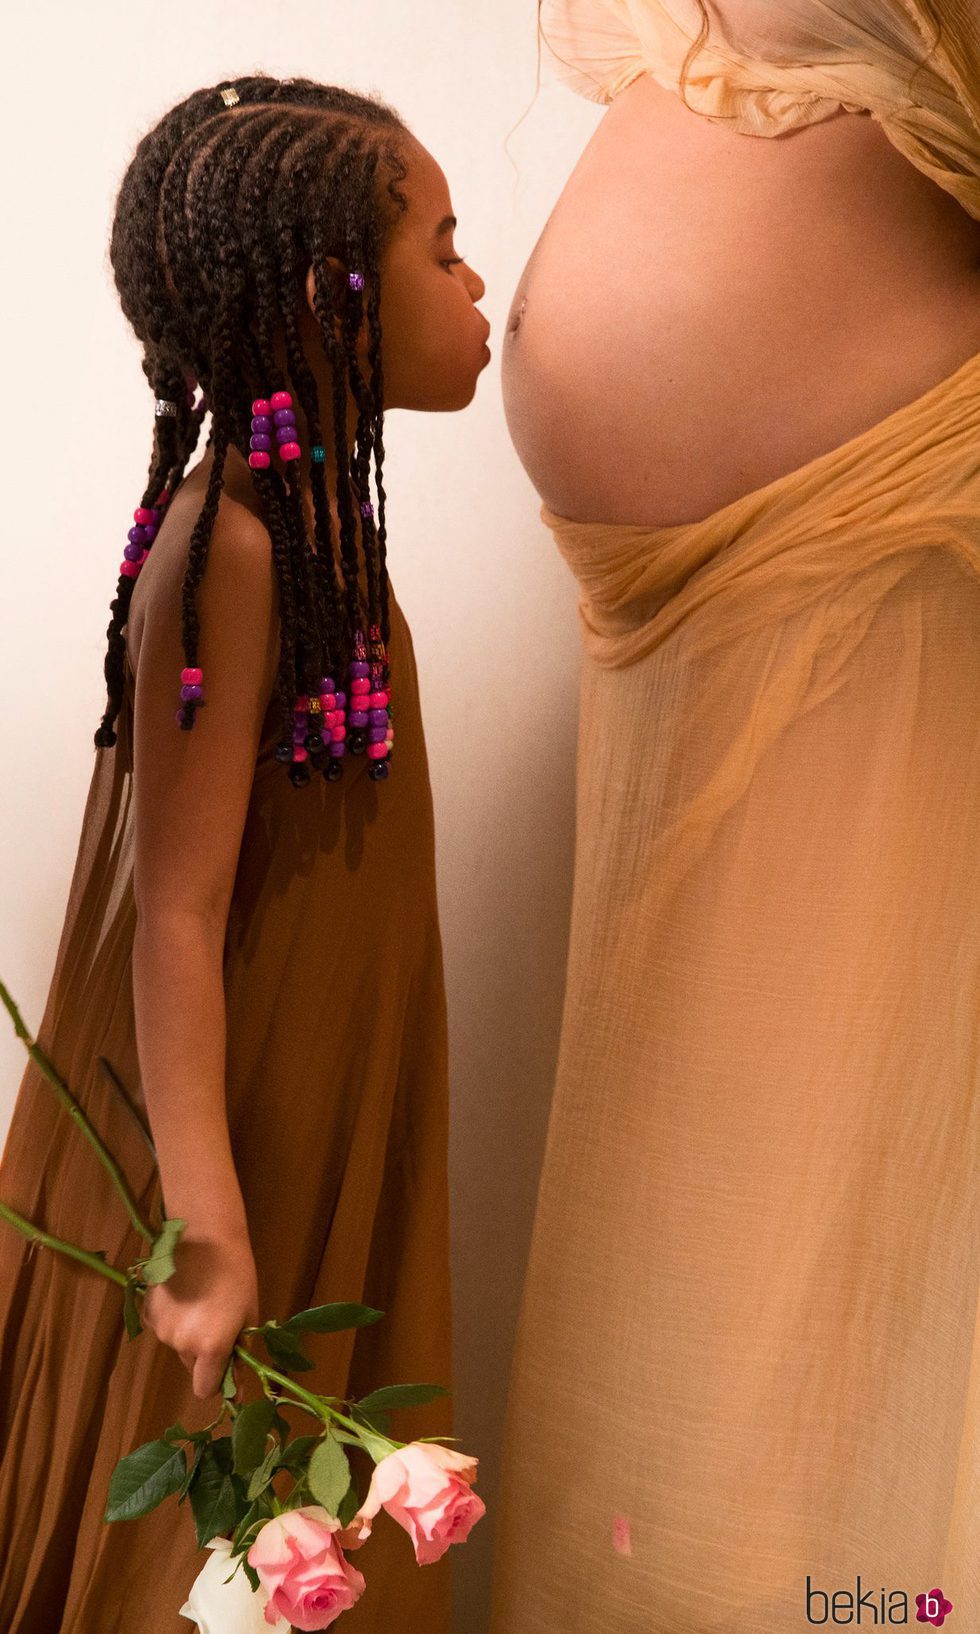 Blue Ivy Carter besa la tripa de embarazada de Beyoncé